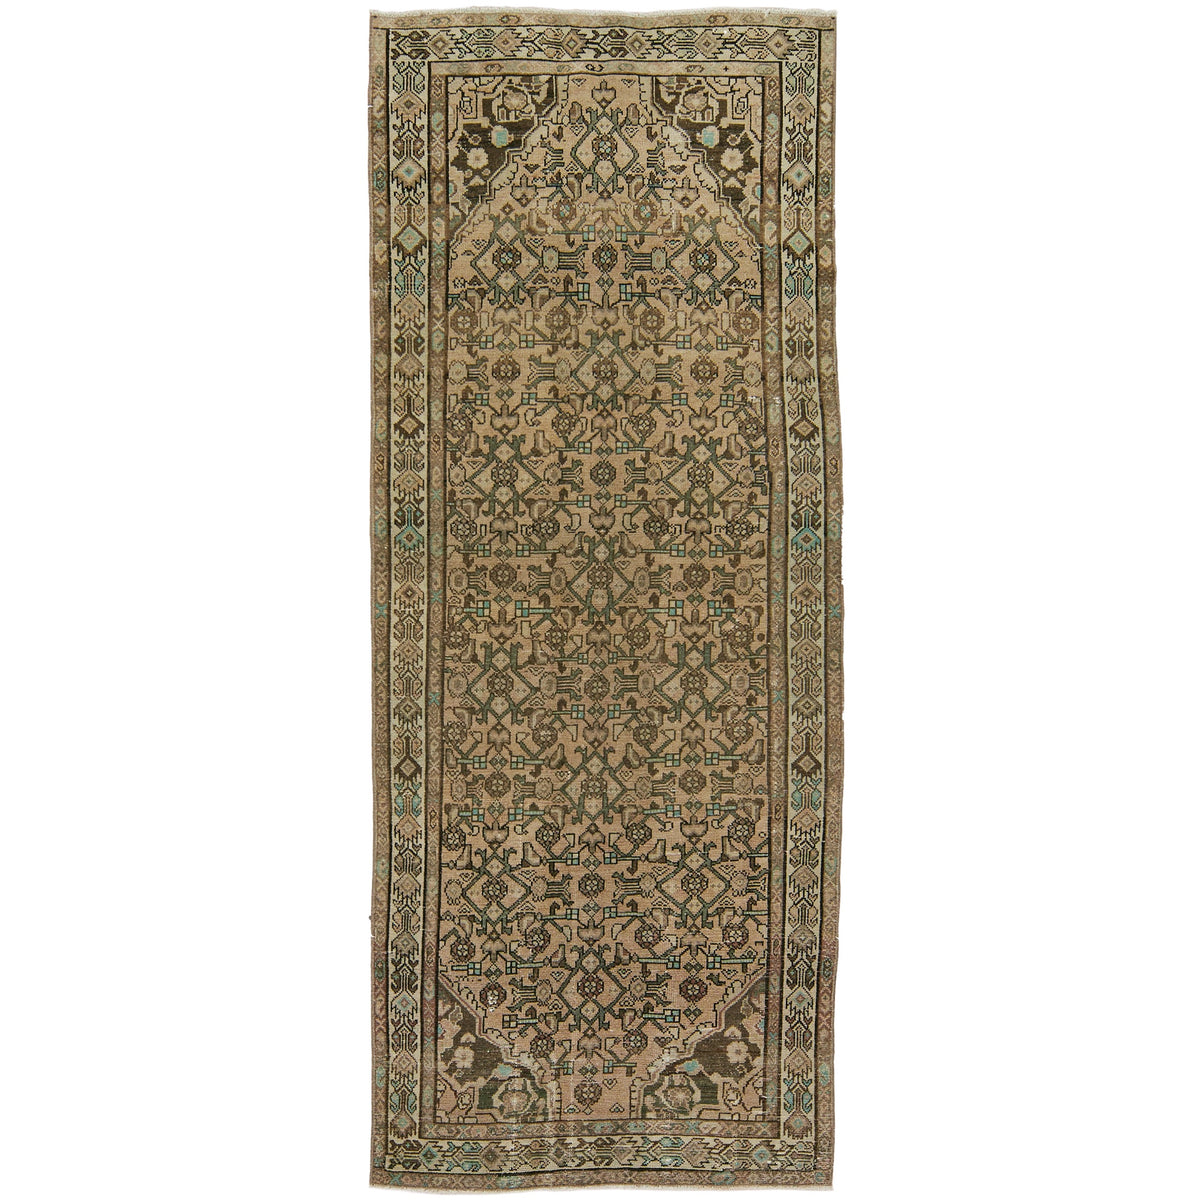 Elizabeth - Classic Elegance in Persian Weaving | Kuden Rugs